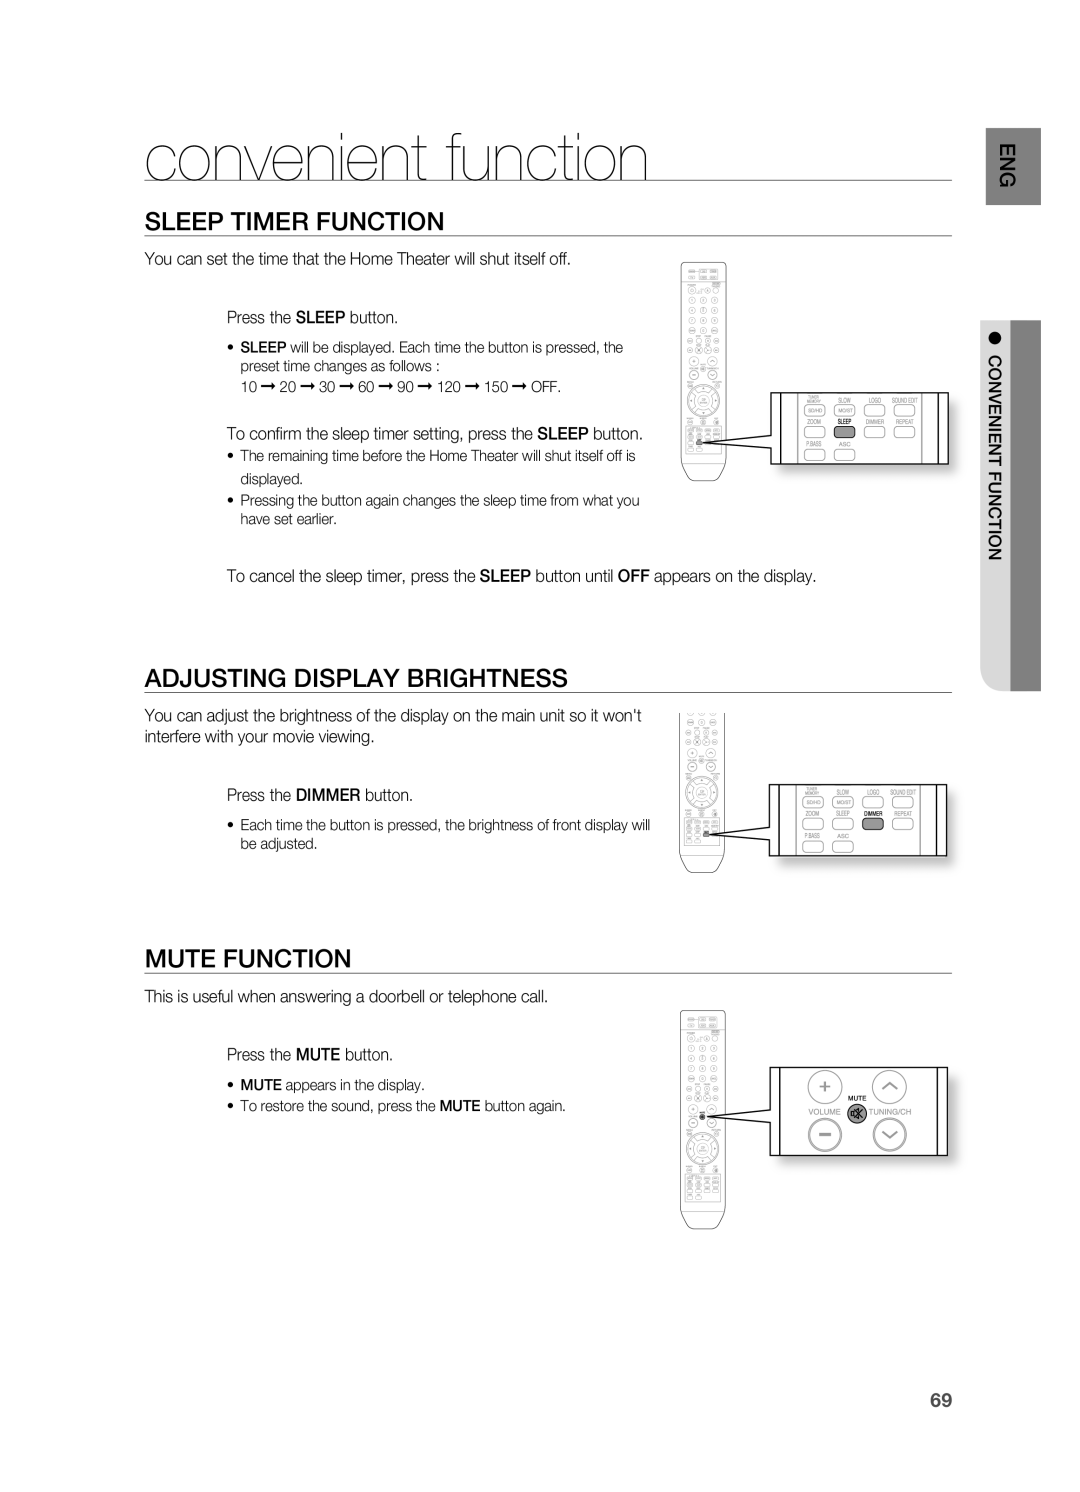 Samsung HT-TZ515 user manual convenient function, SLEEP TIMEr FUNCTION, ADJUSTINg DISPLAY BrIgHTNESS, Mute Function 